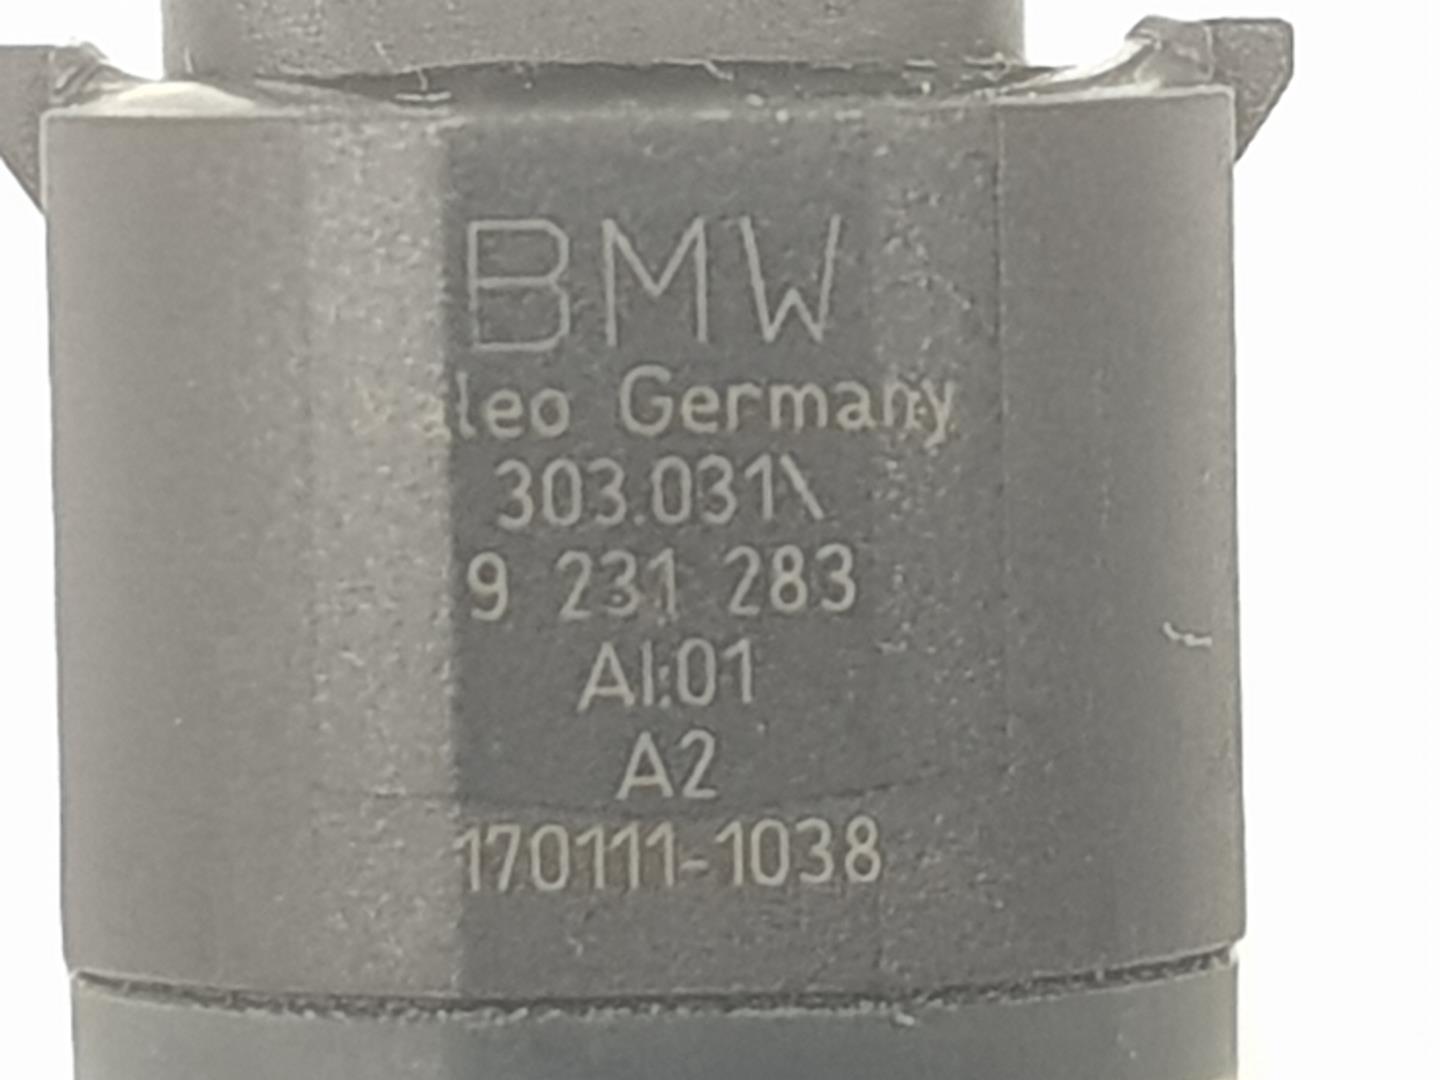 BMW 7 Series F01/F02 (2008-2015) Front Parking Sensor 66209270050, 9231283, NEGRO668 24857196